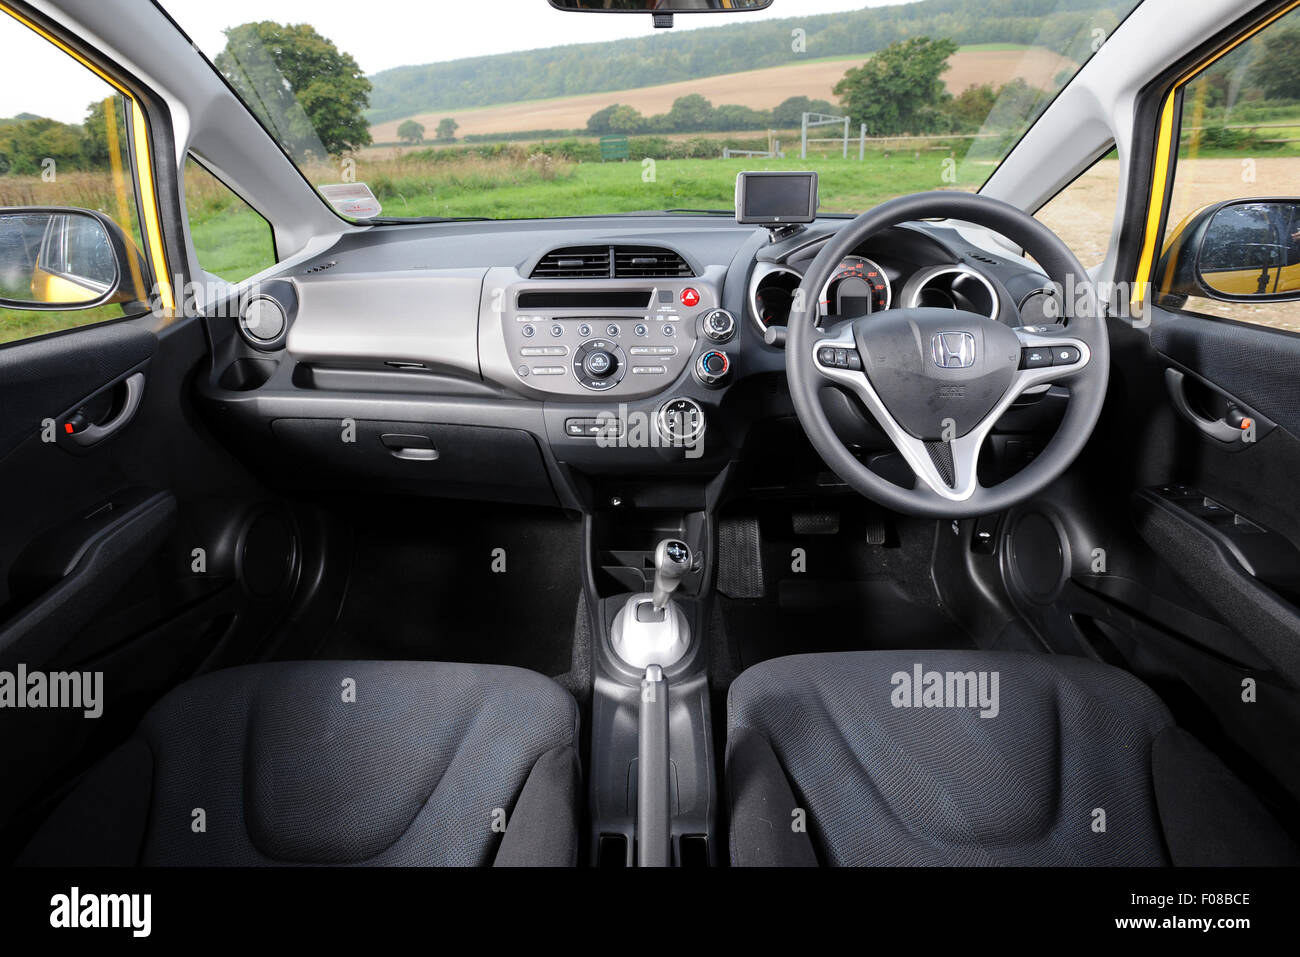 2005 Honda Jazz compact car interior Stock Photo - Alamy